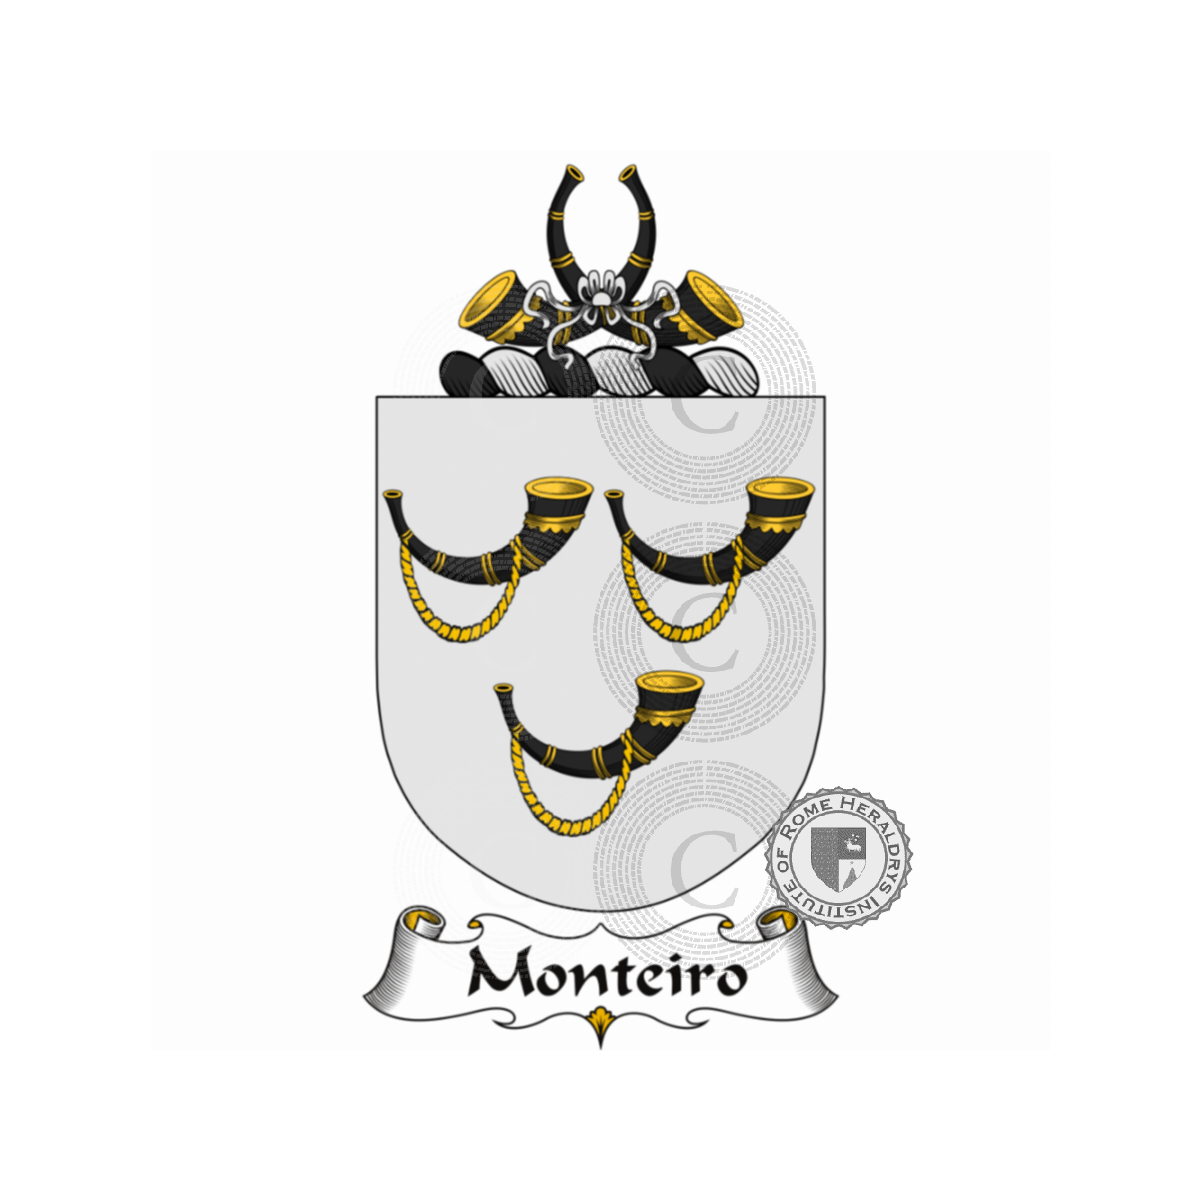 Coat of arms of familyMonteiro